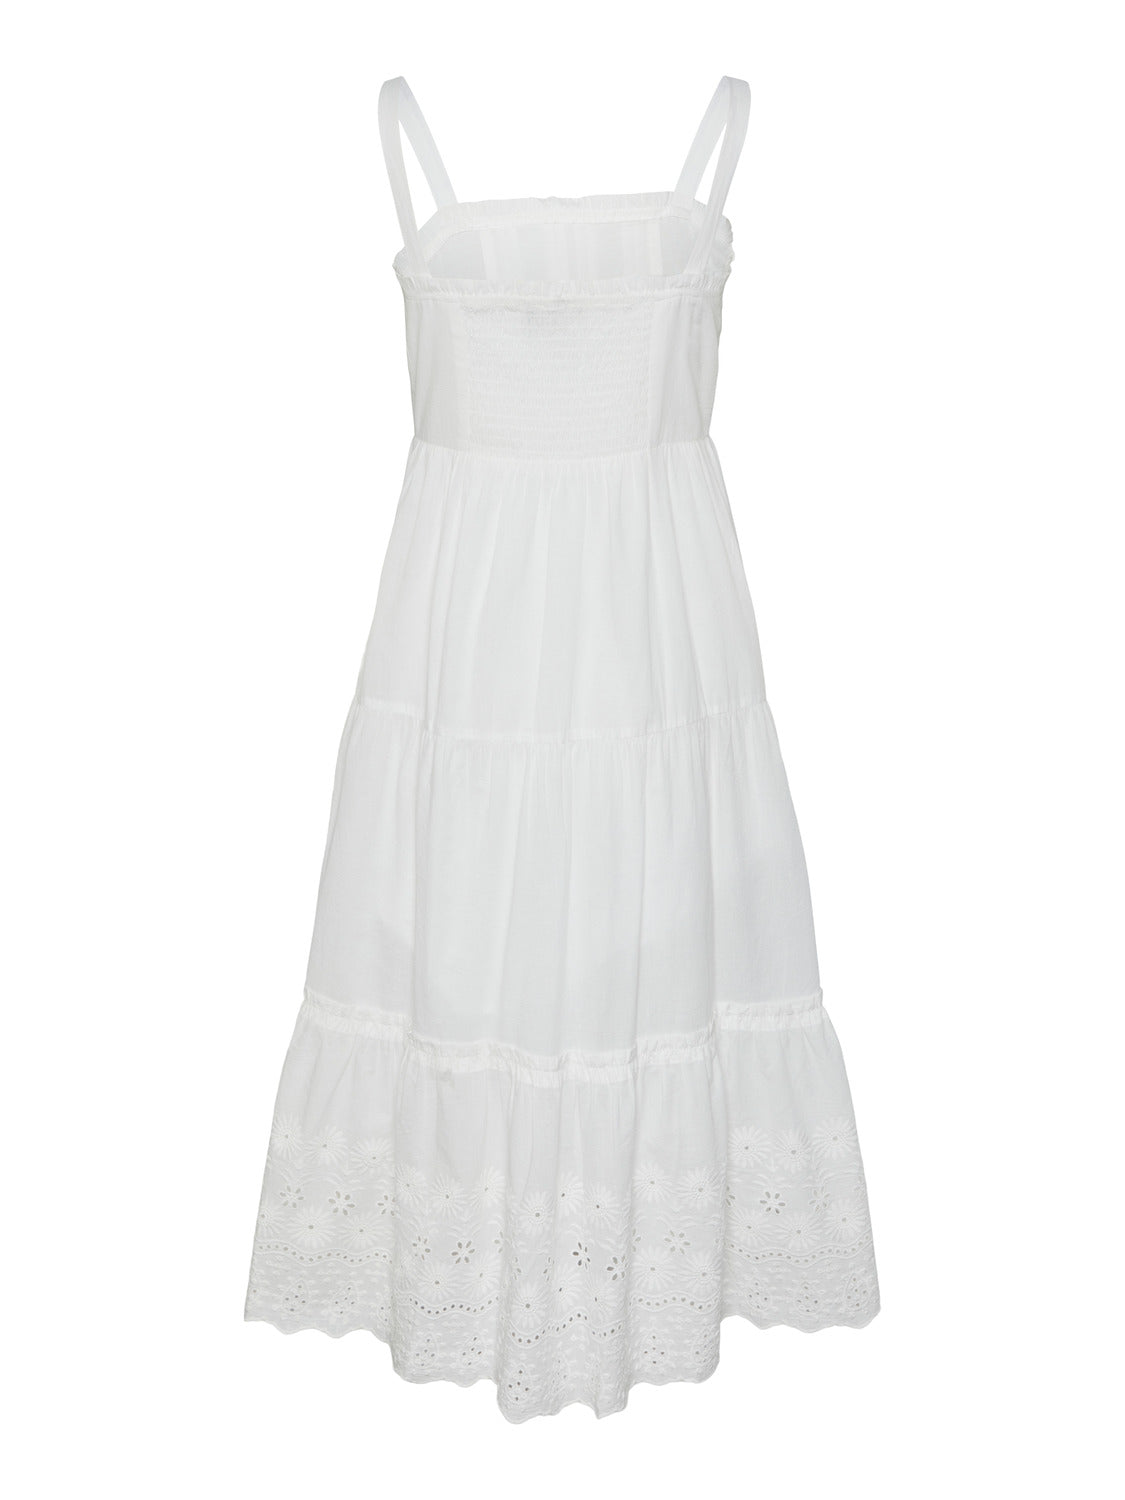 YASDUST Dress - Star White